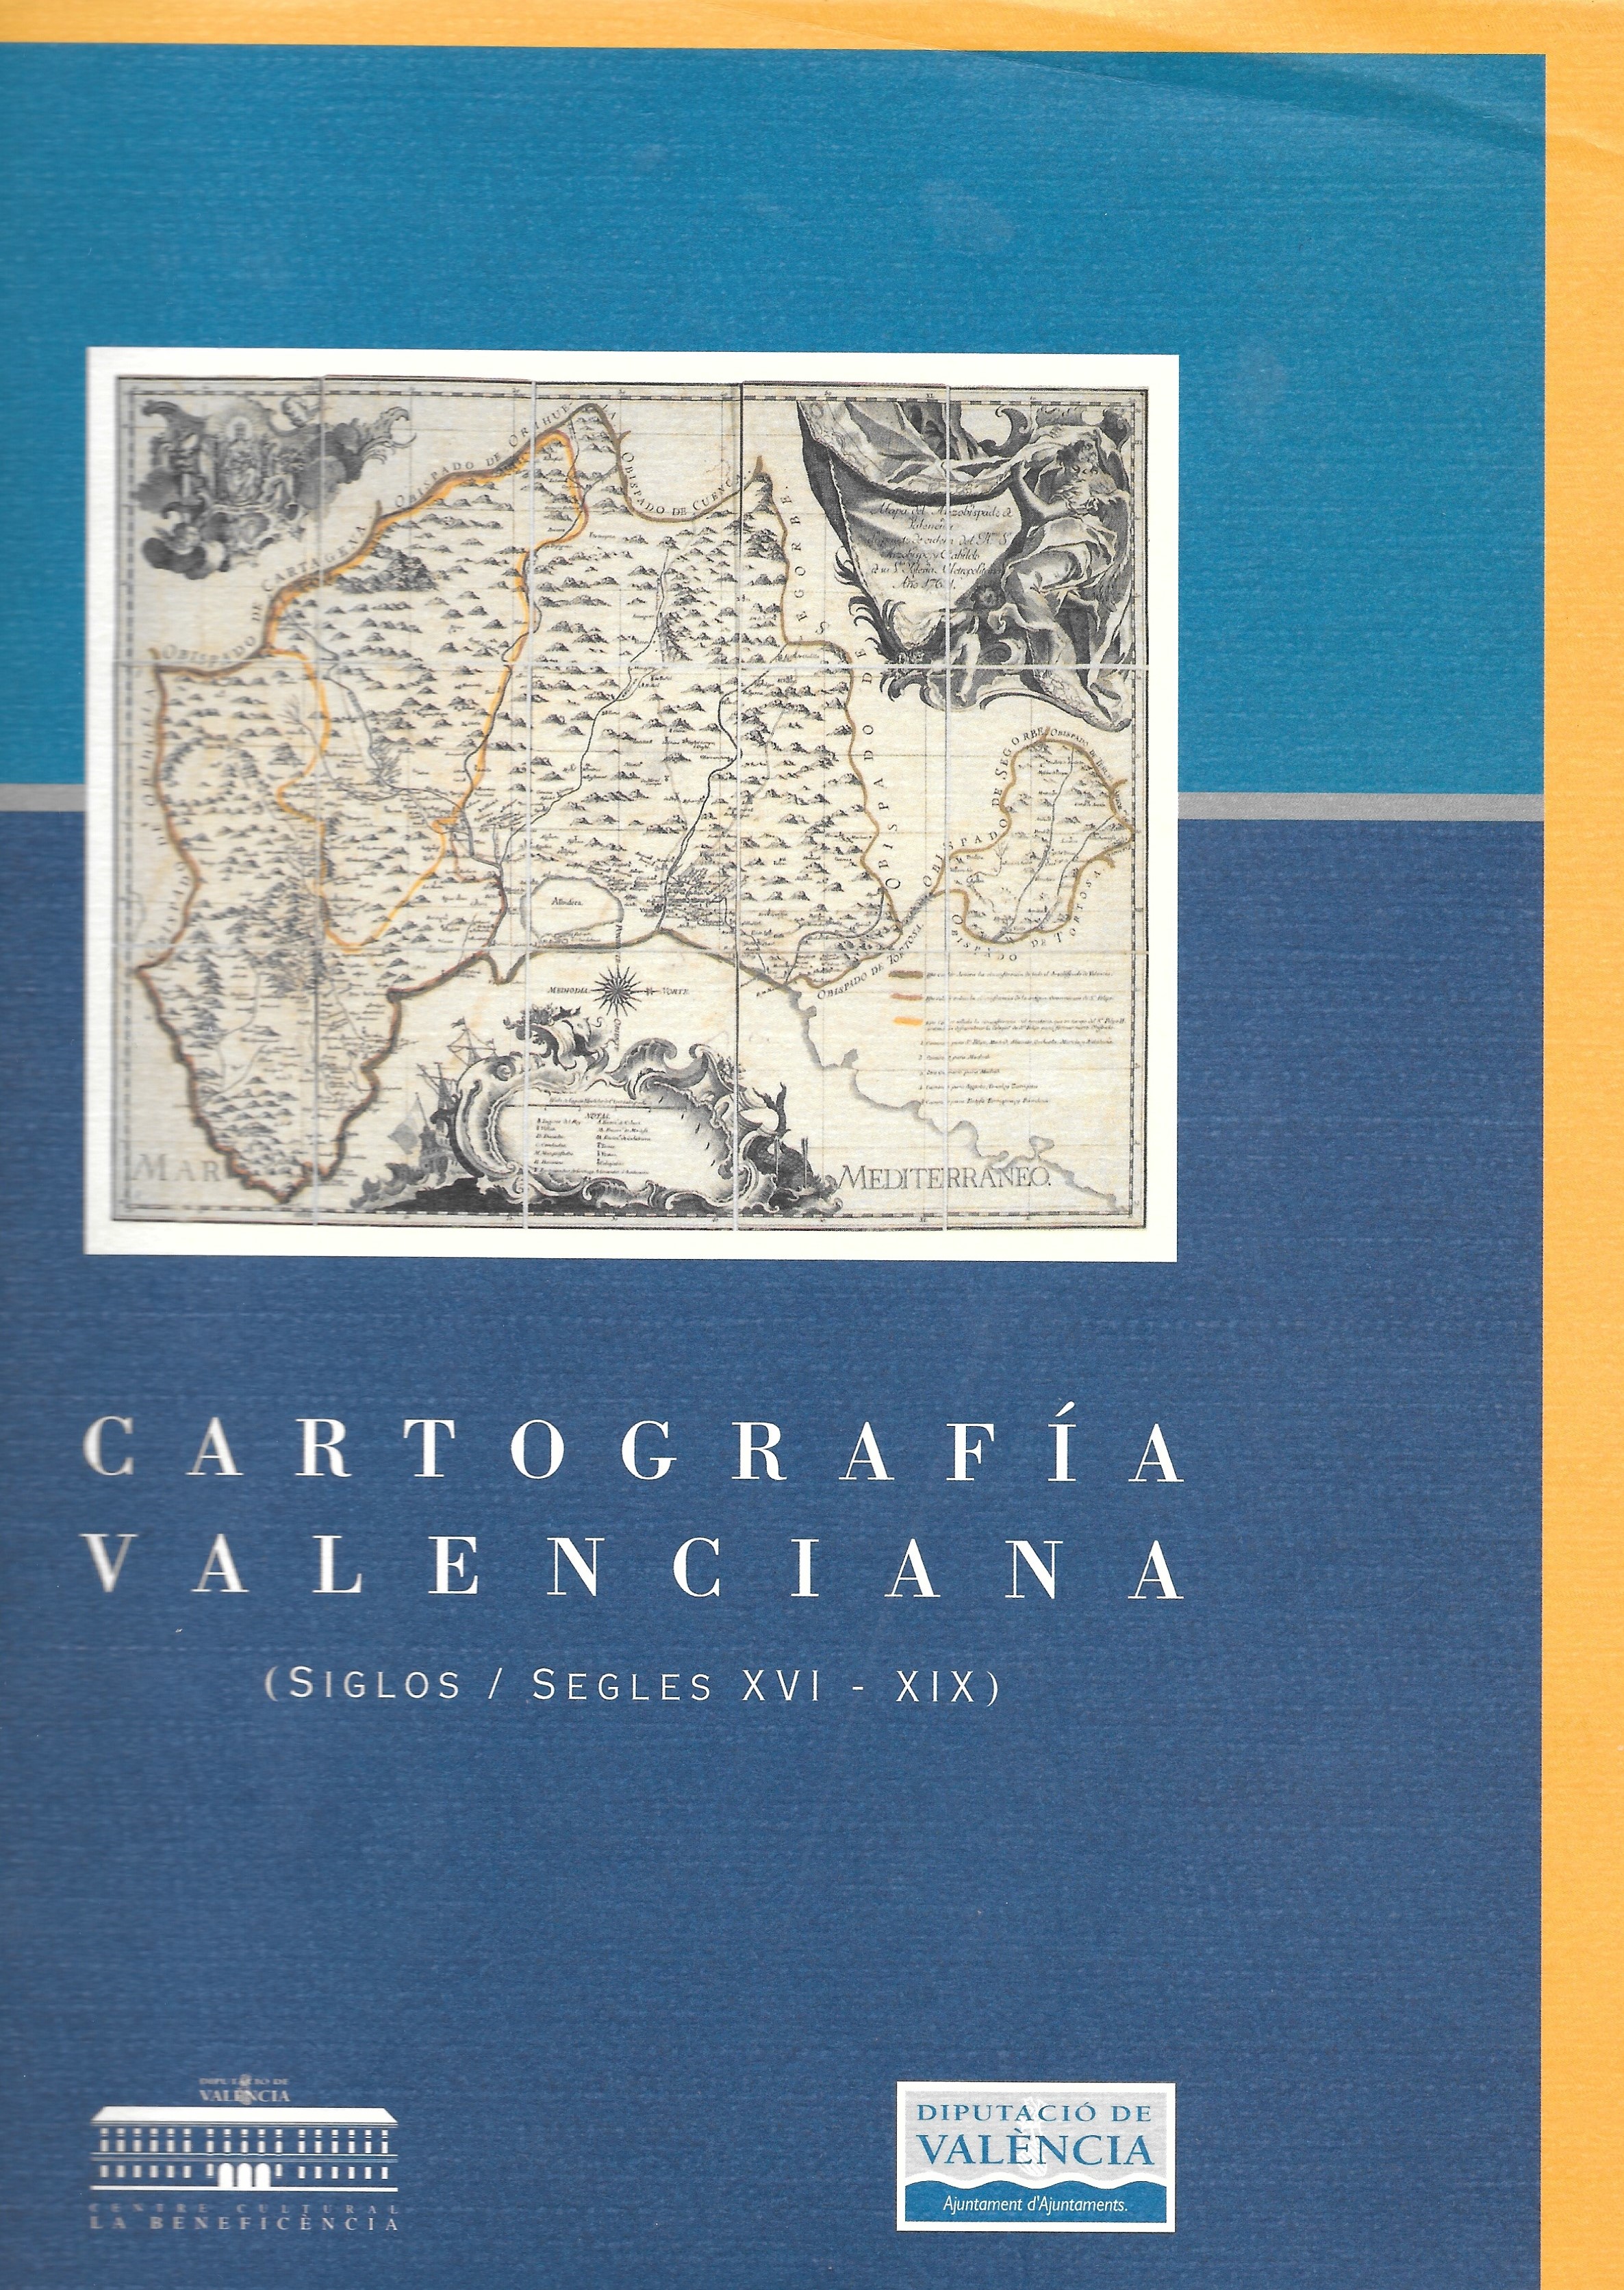 Cartografia Valenciana (Segles XVI-XIX)